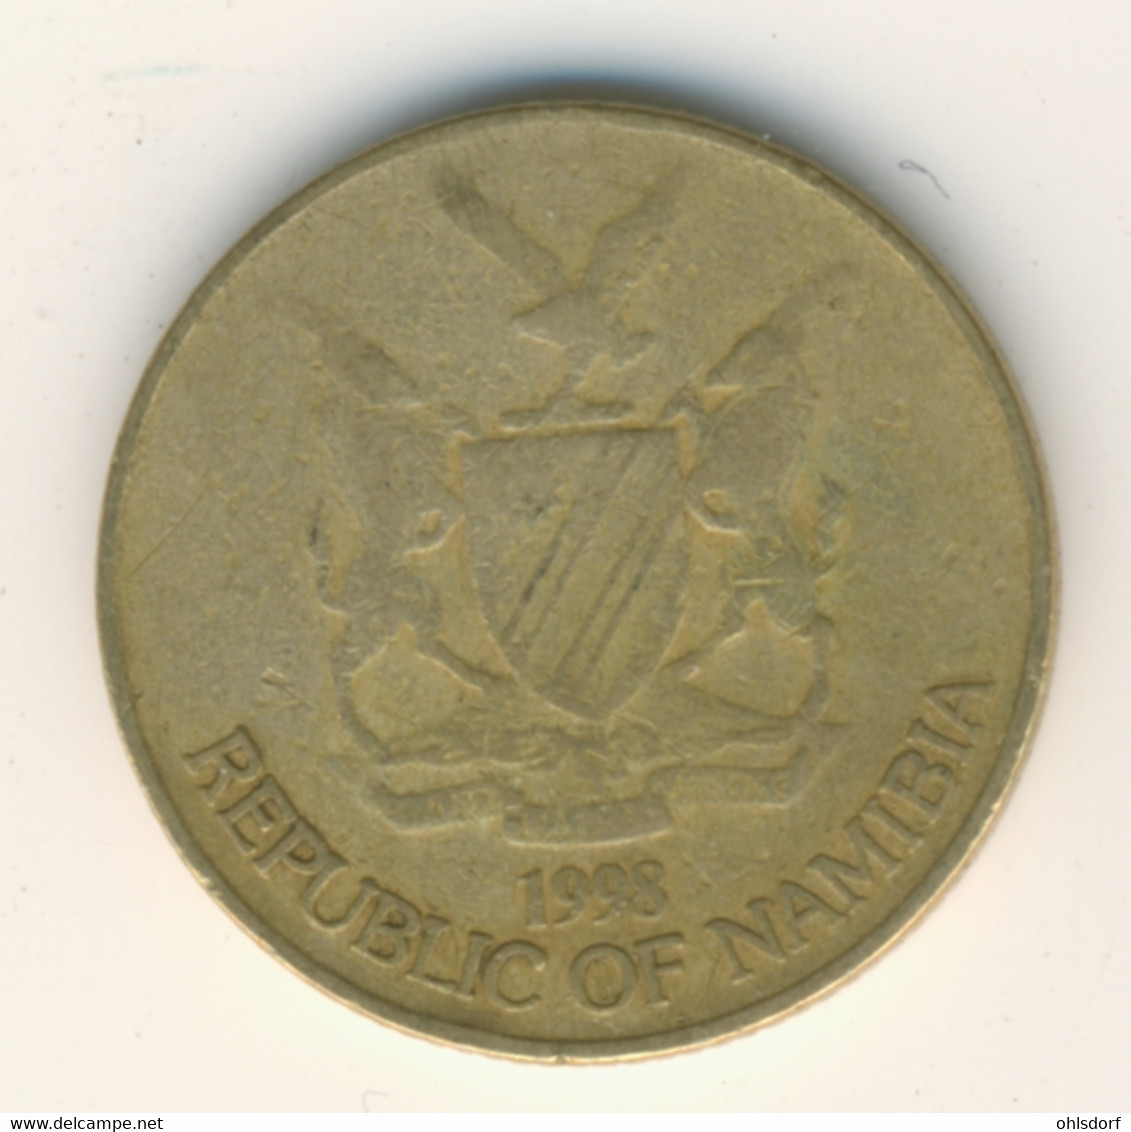 NAMIBIA 1998: 1 Dollar, KM 4 - Namibia